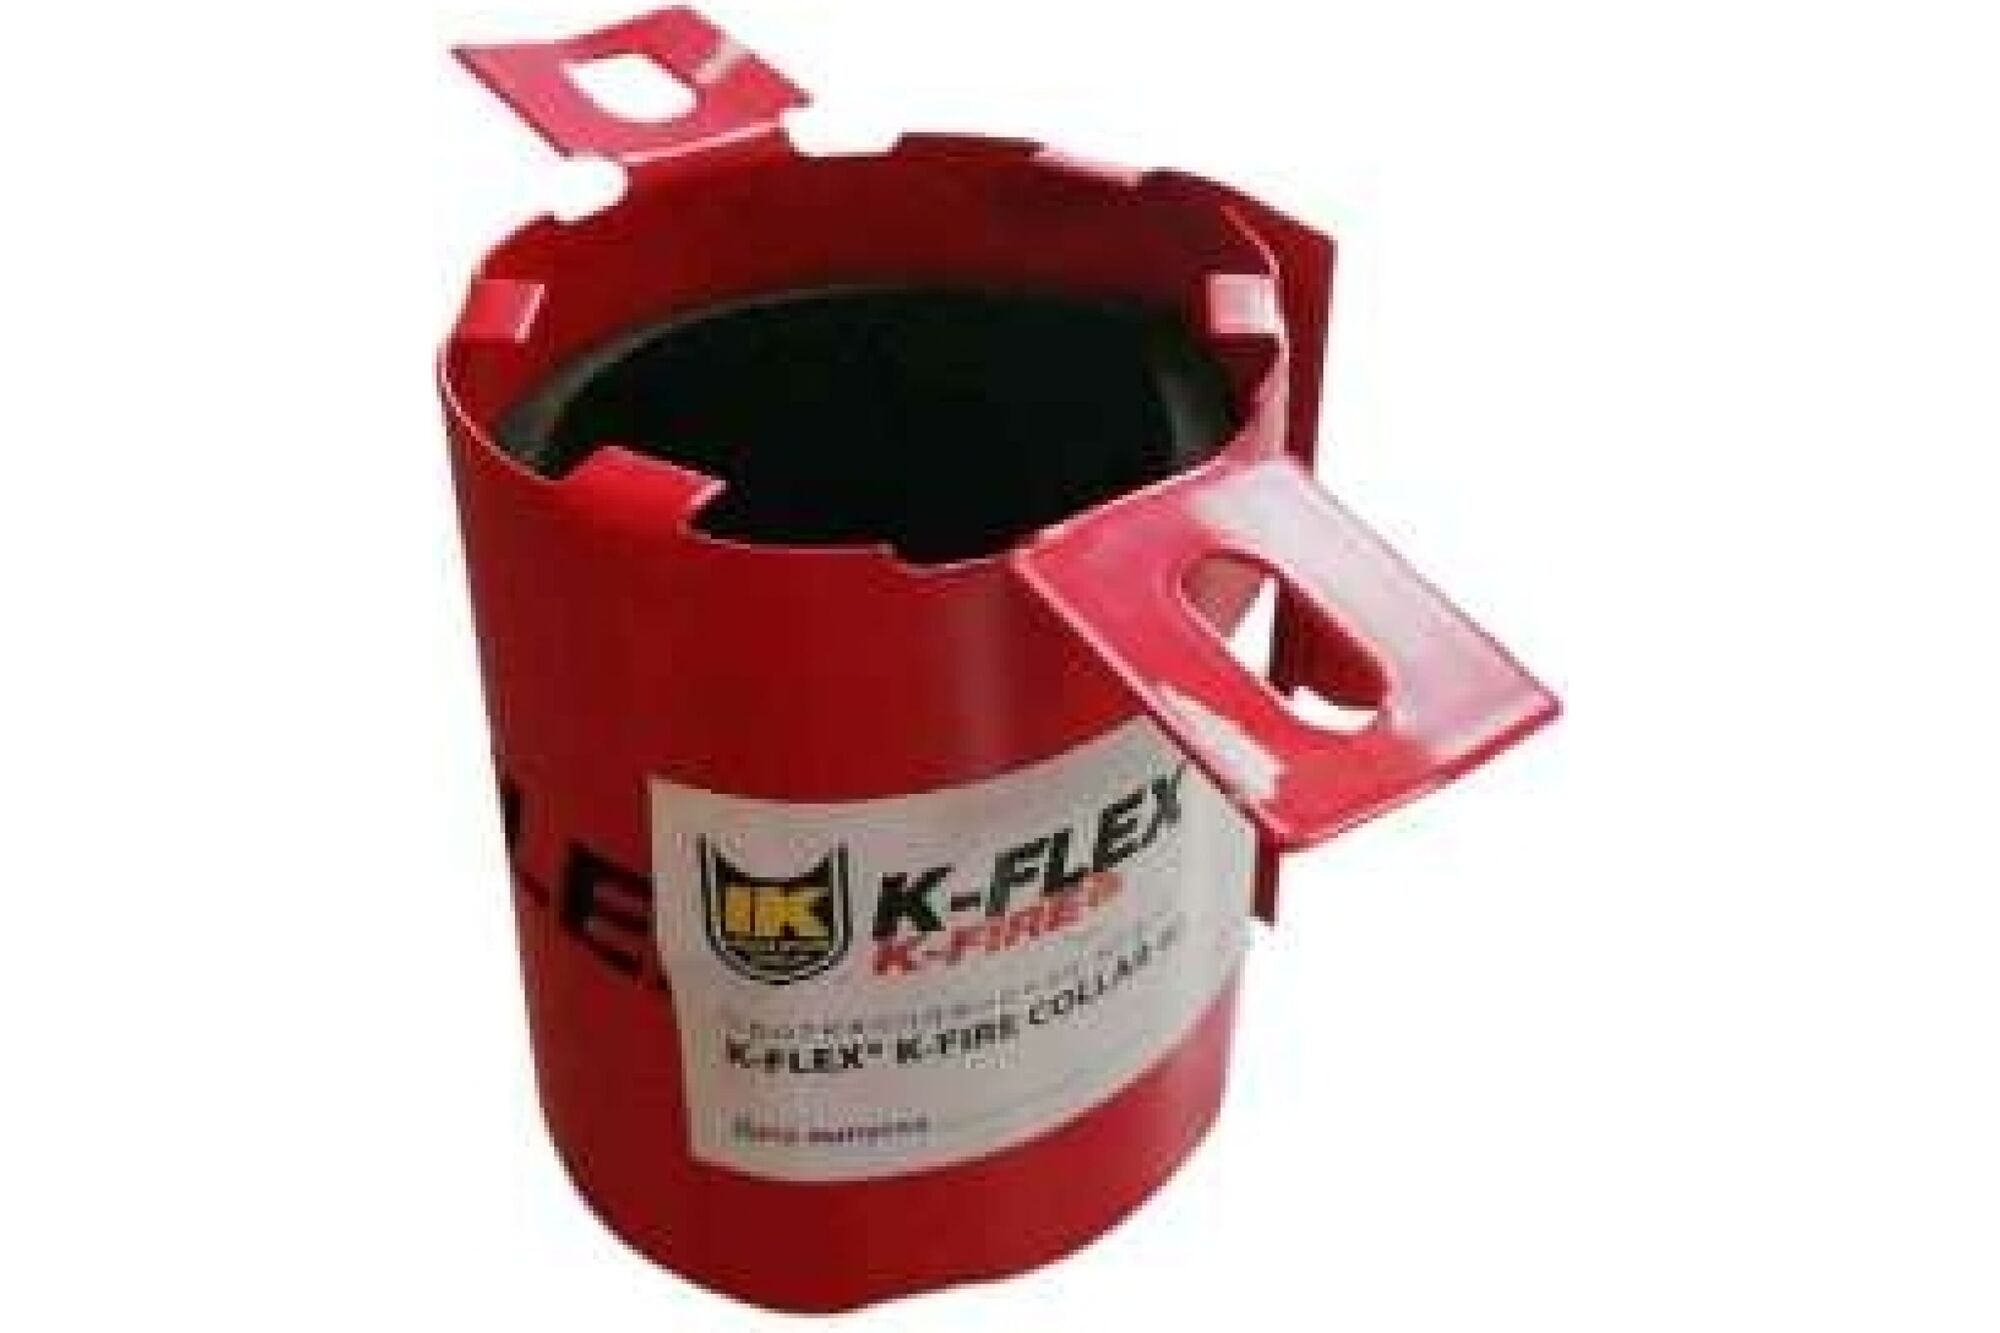 Противопожарная муфта K-FLEX K-FIRE COLLAR 040 R85CFGS00040 K-Flex